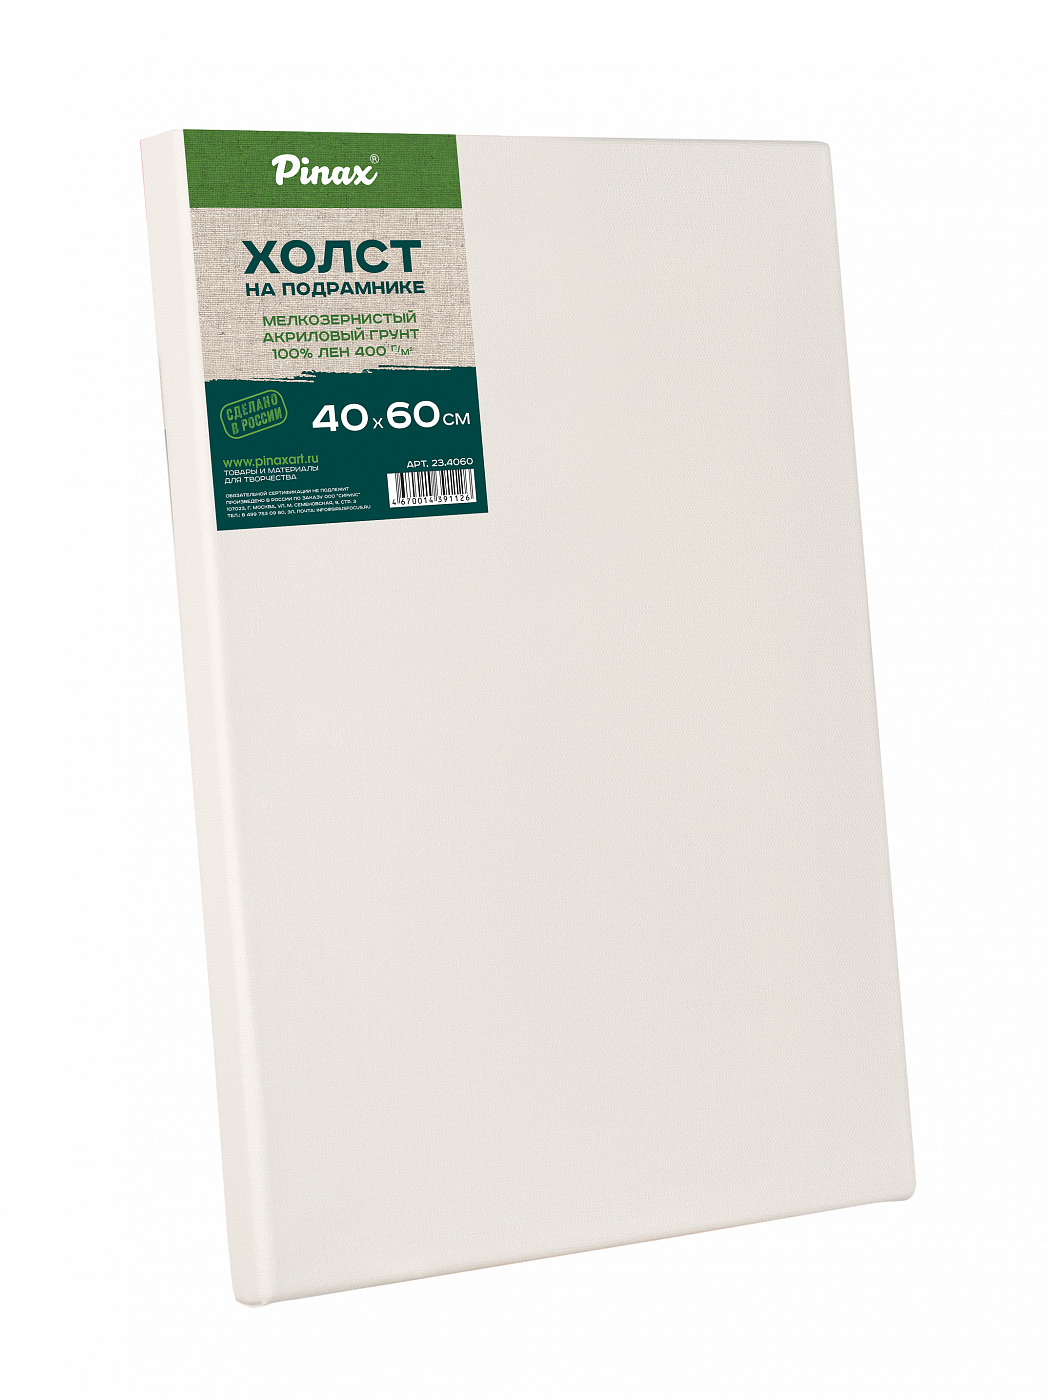 Холст на подрамнике Pinax 40x60 см, 100% лен, 400 г